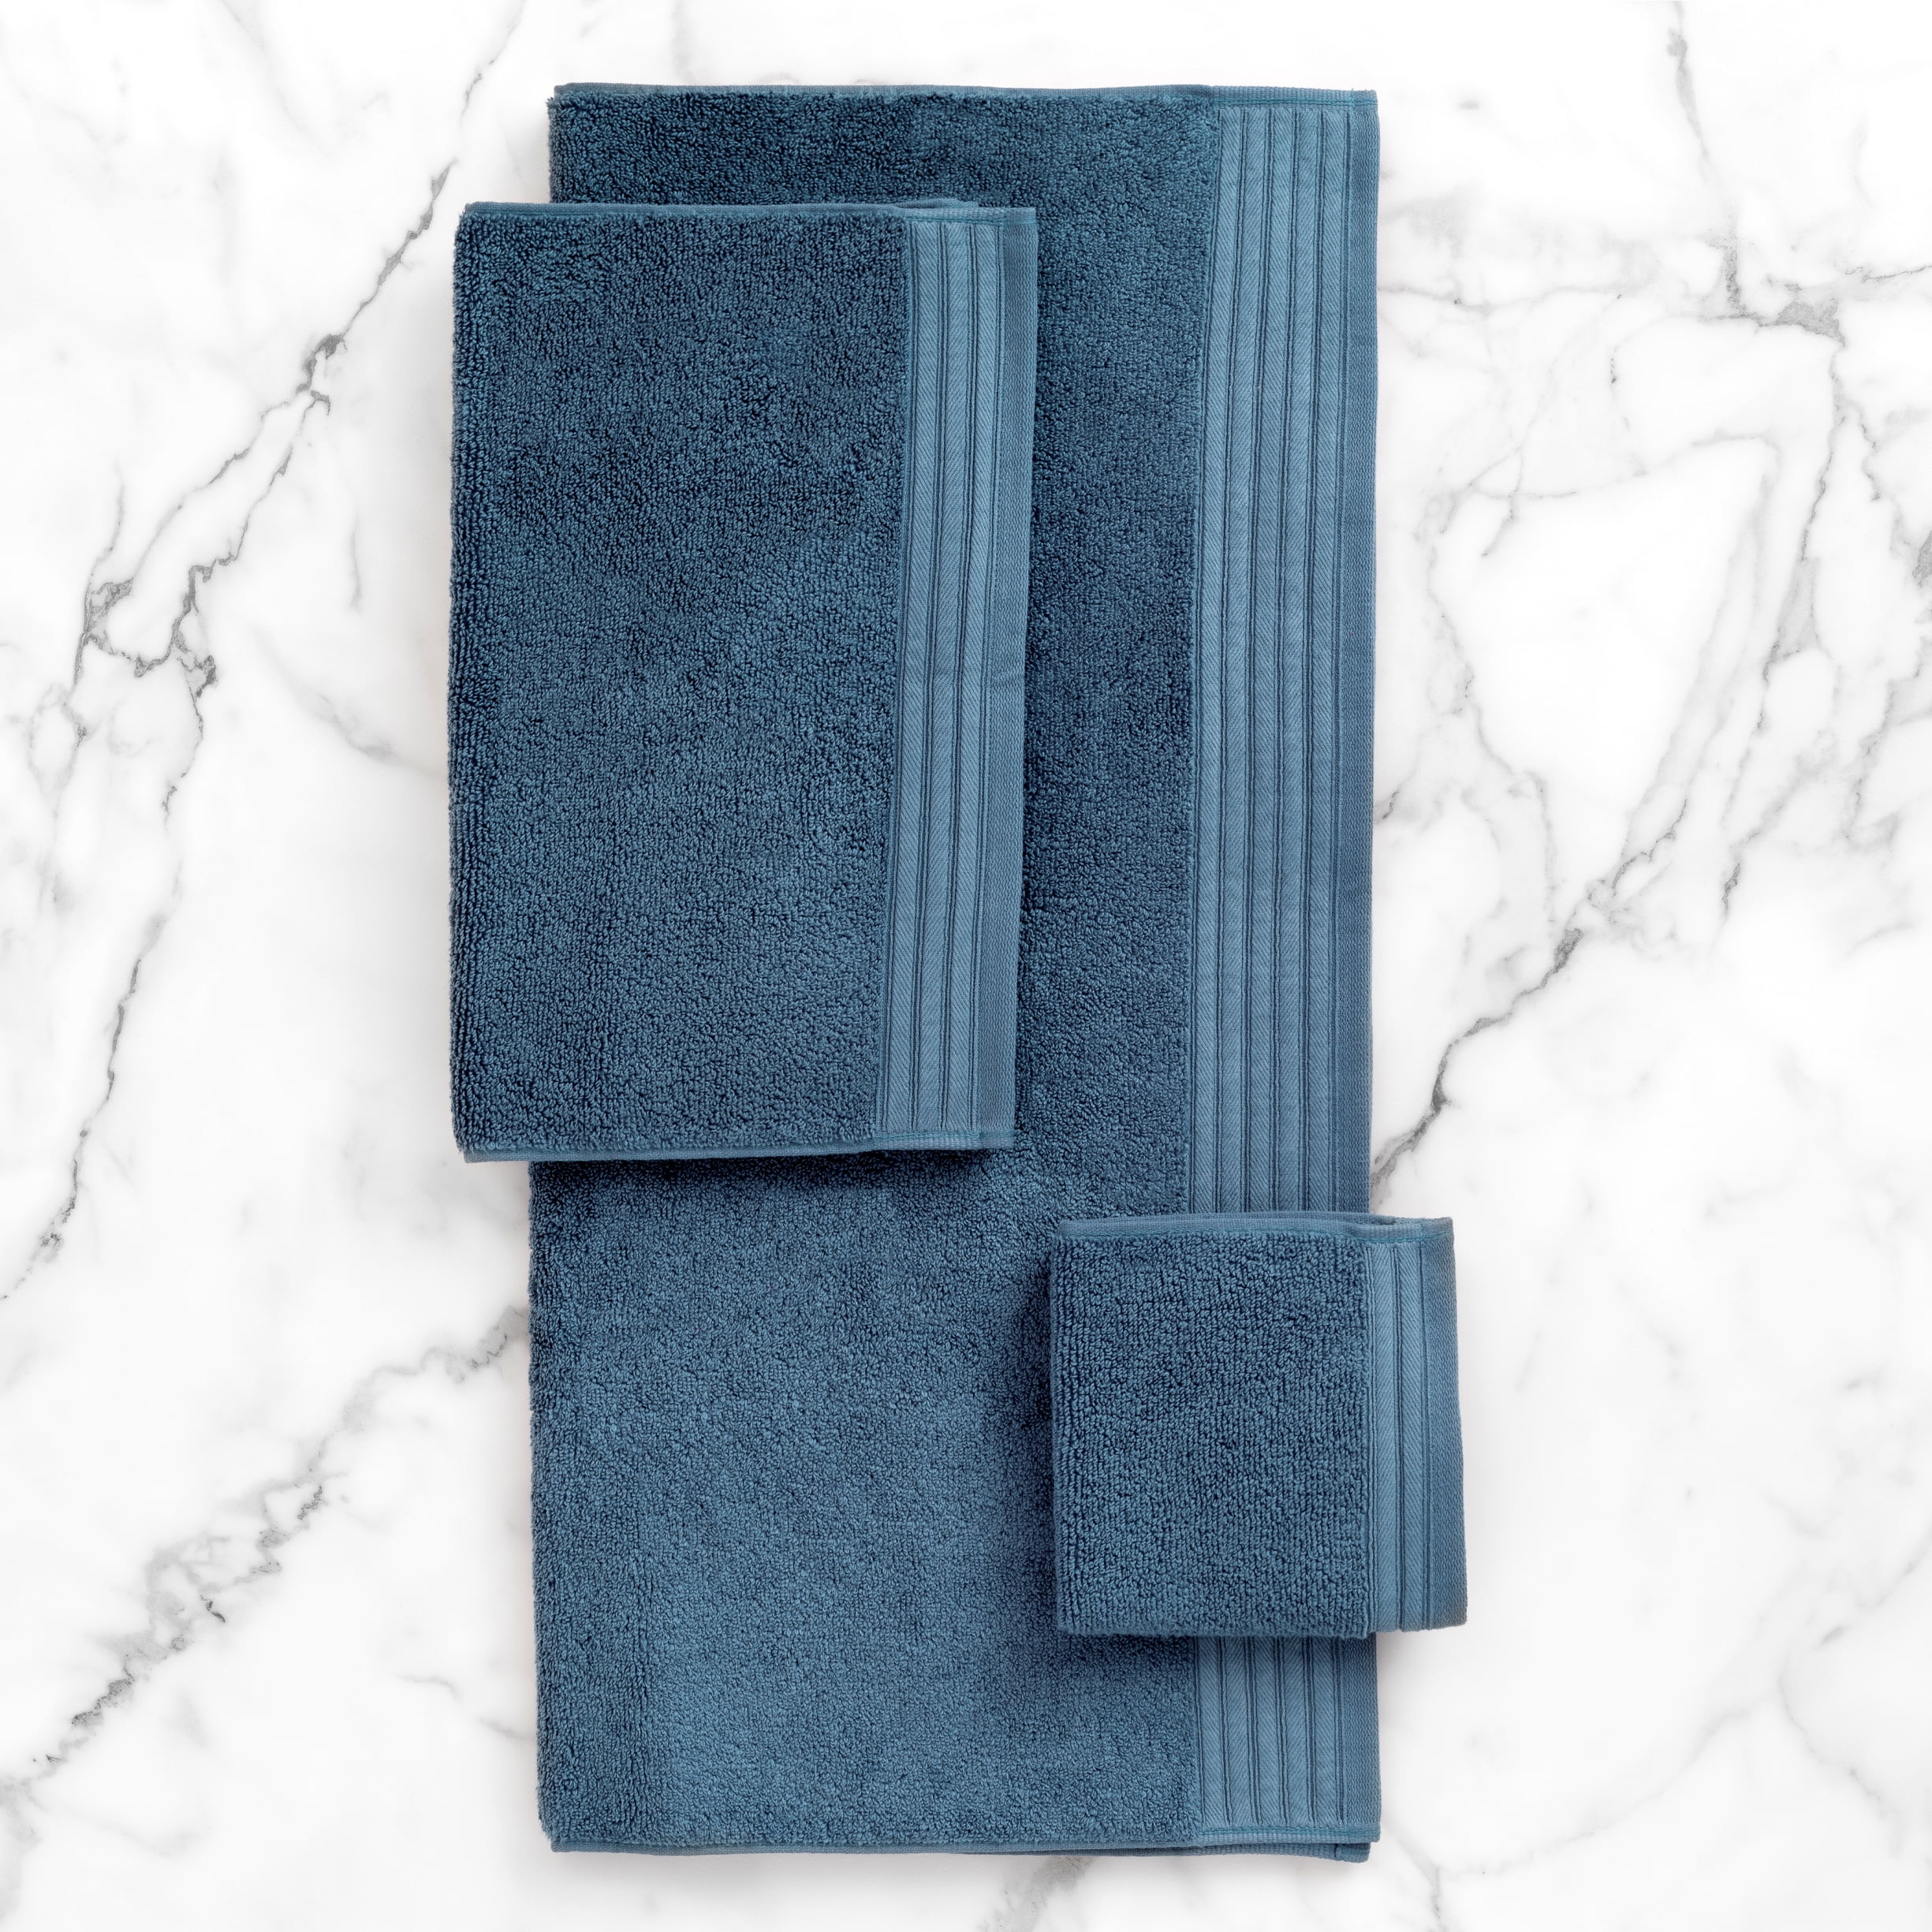 Bath/Hand Towels and Washcloths - Cosmic Blues ($60 set)